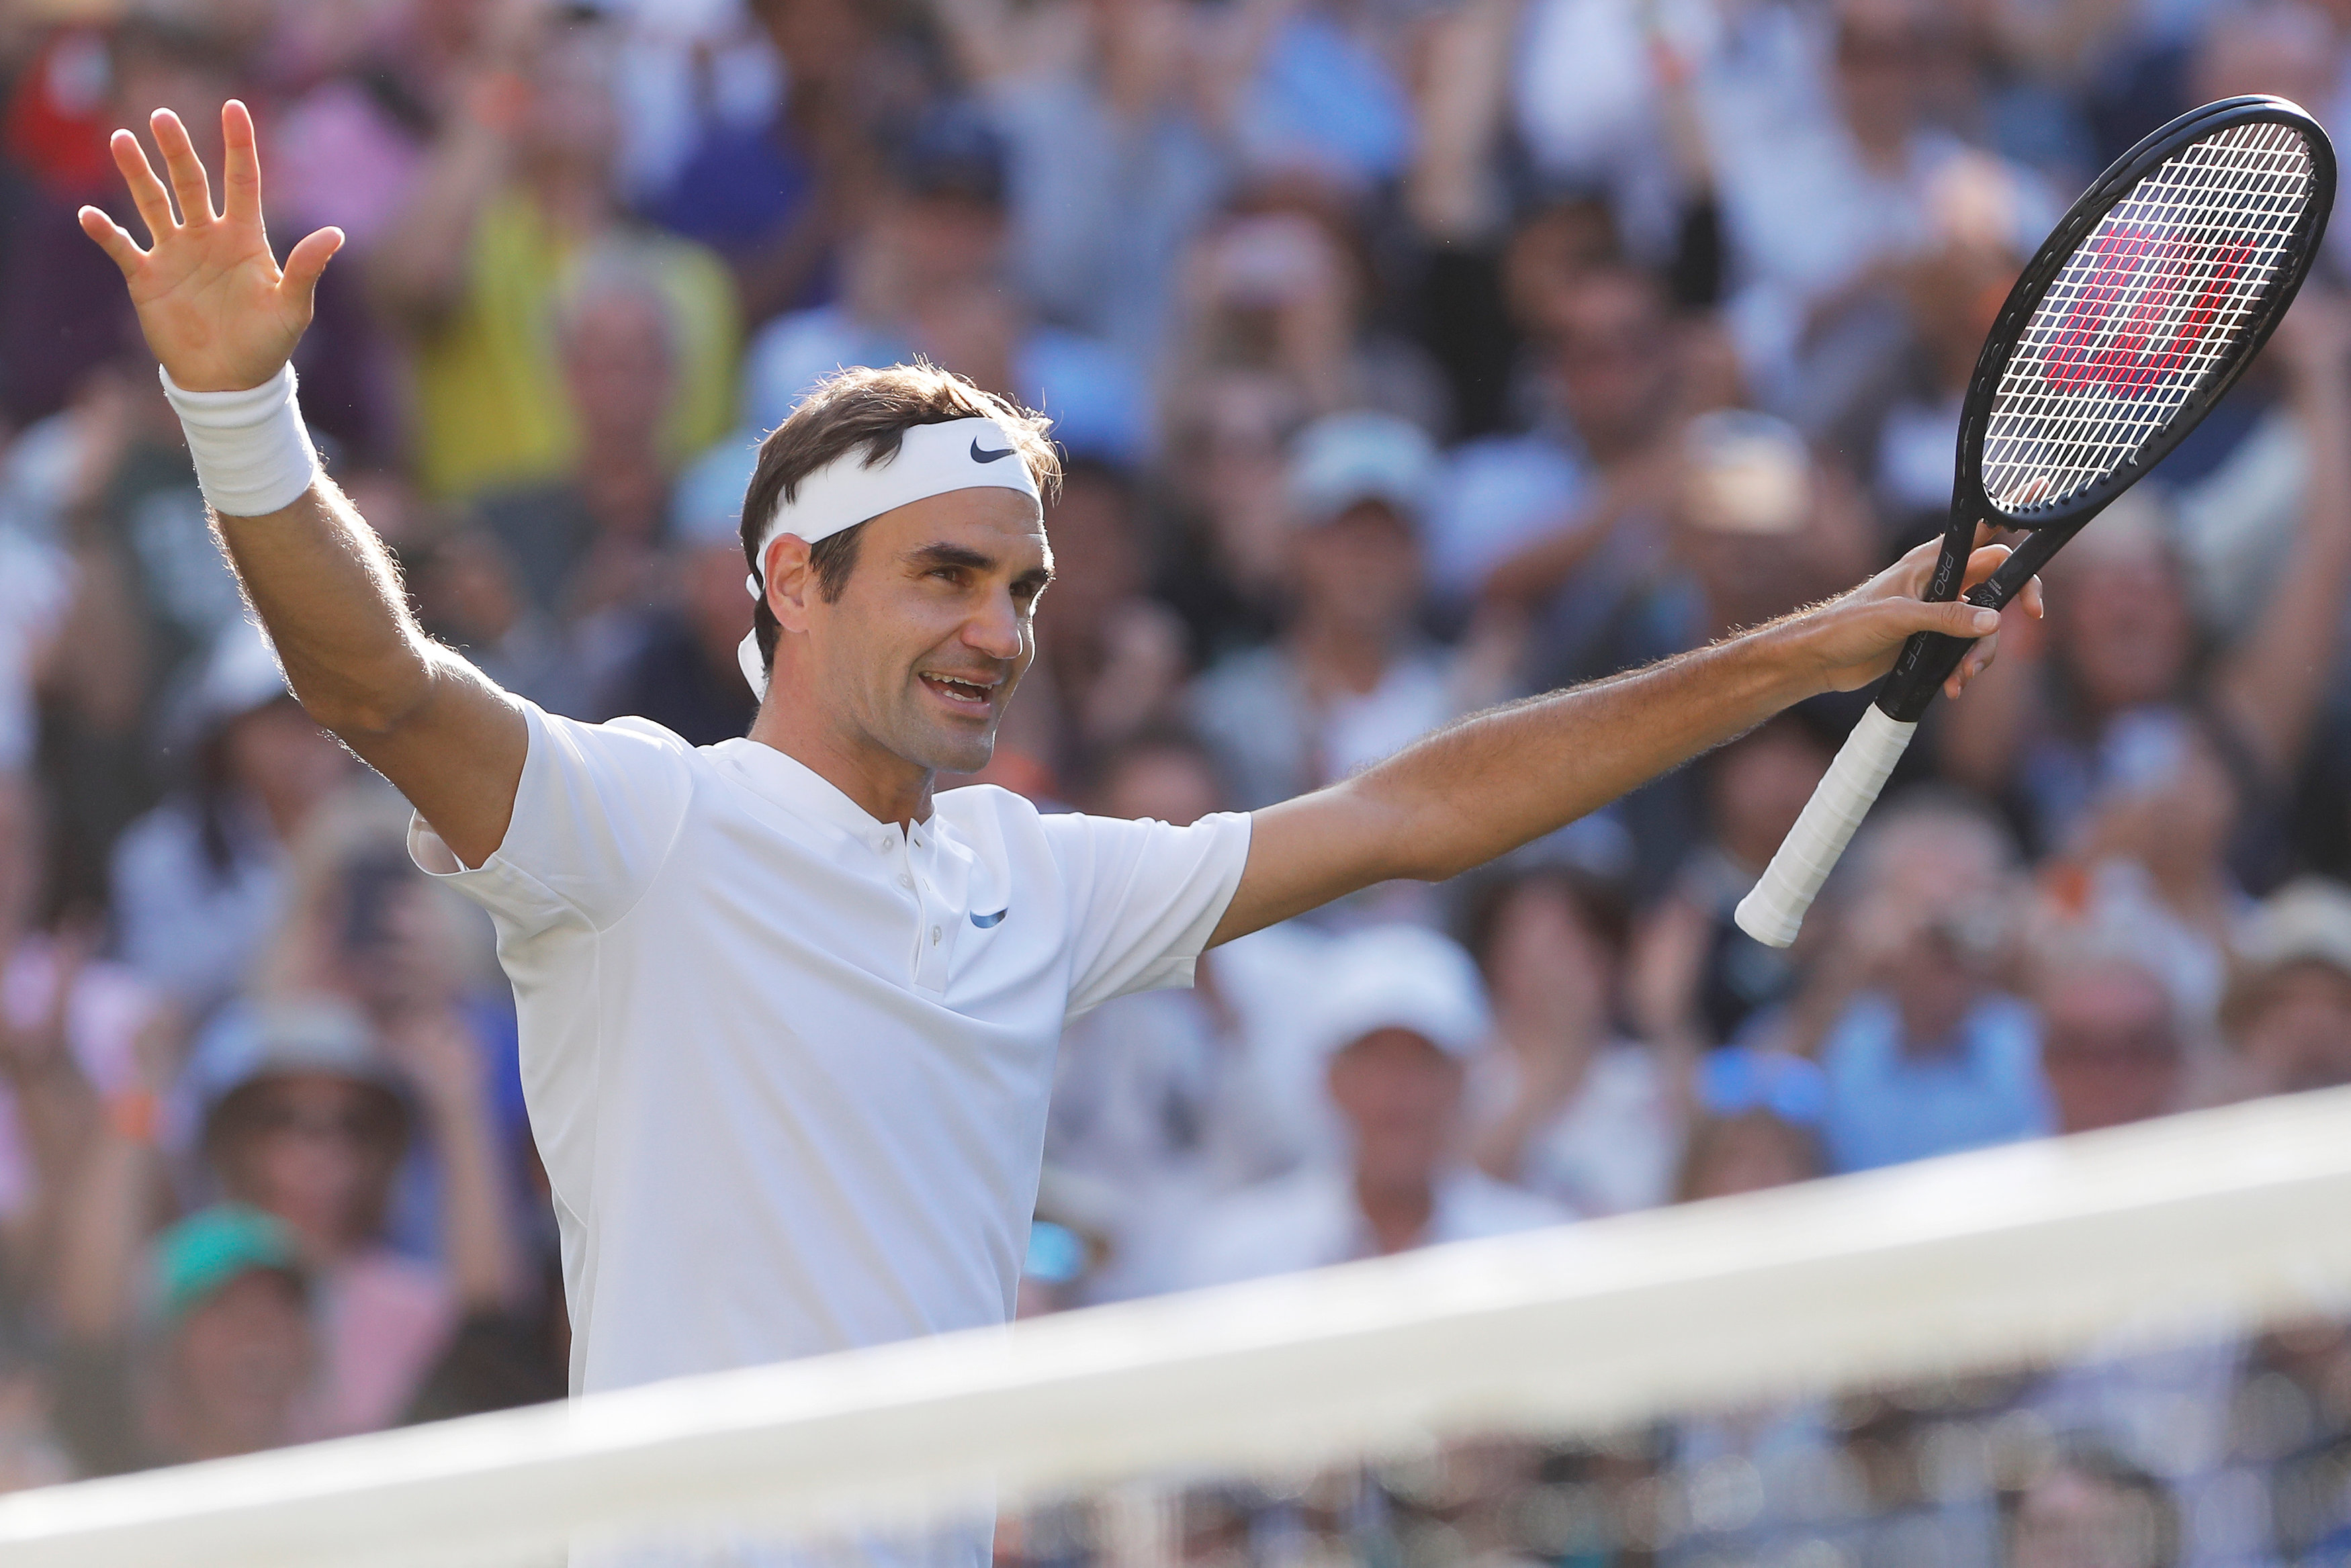 Tennis: Federer outclasses Raonic to reach Wimbledon semifinals